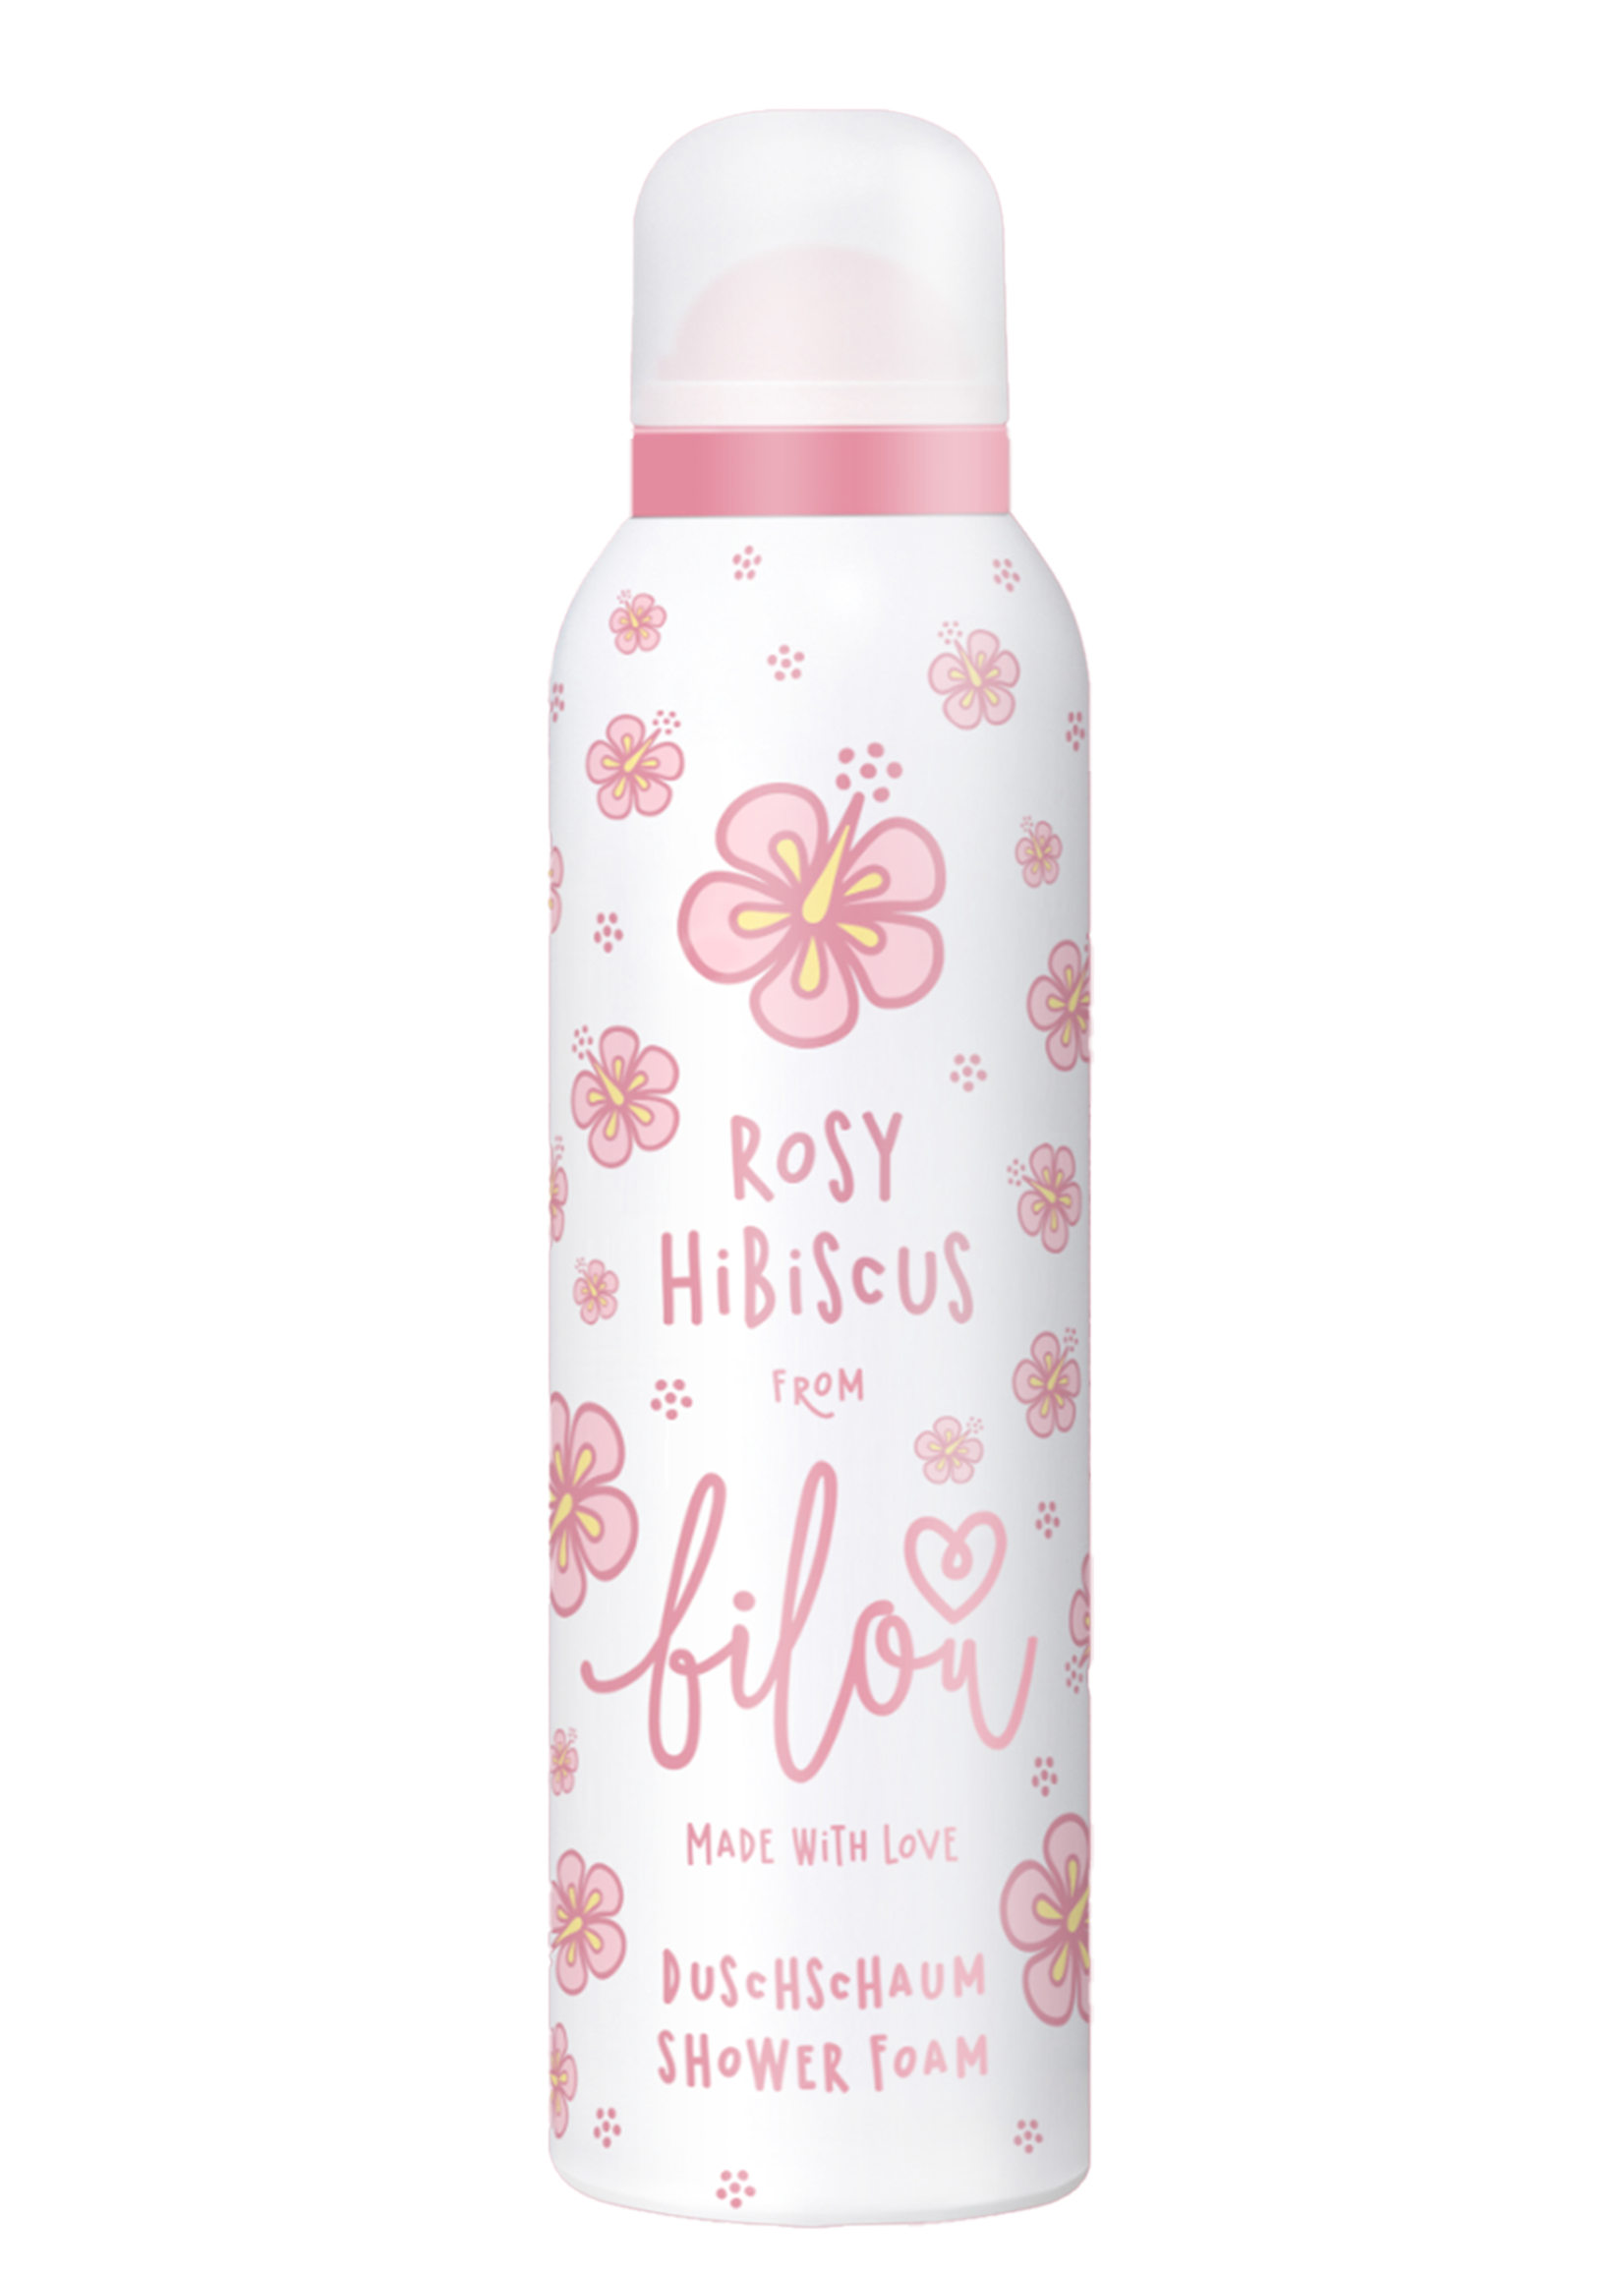 Bilou Bilou Showerfoam Rosy Hibiscus